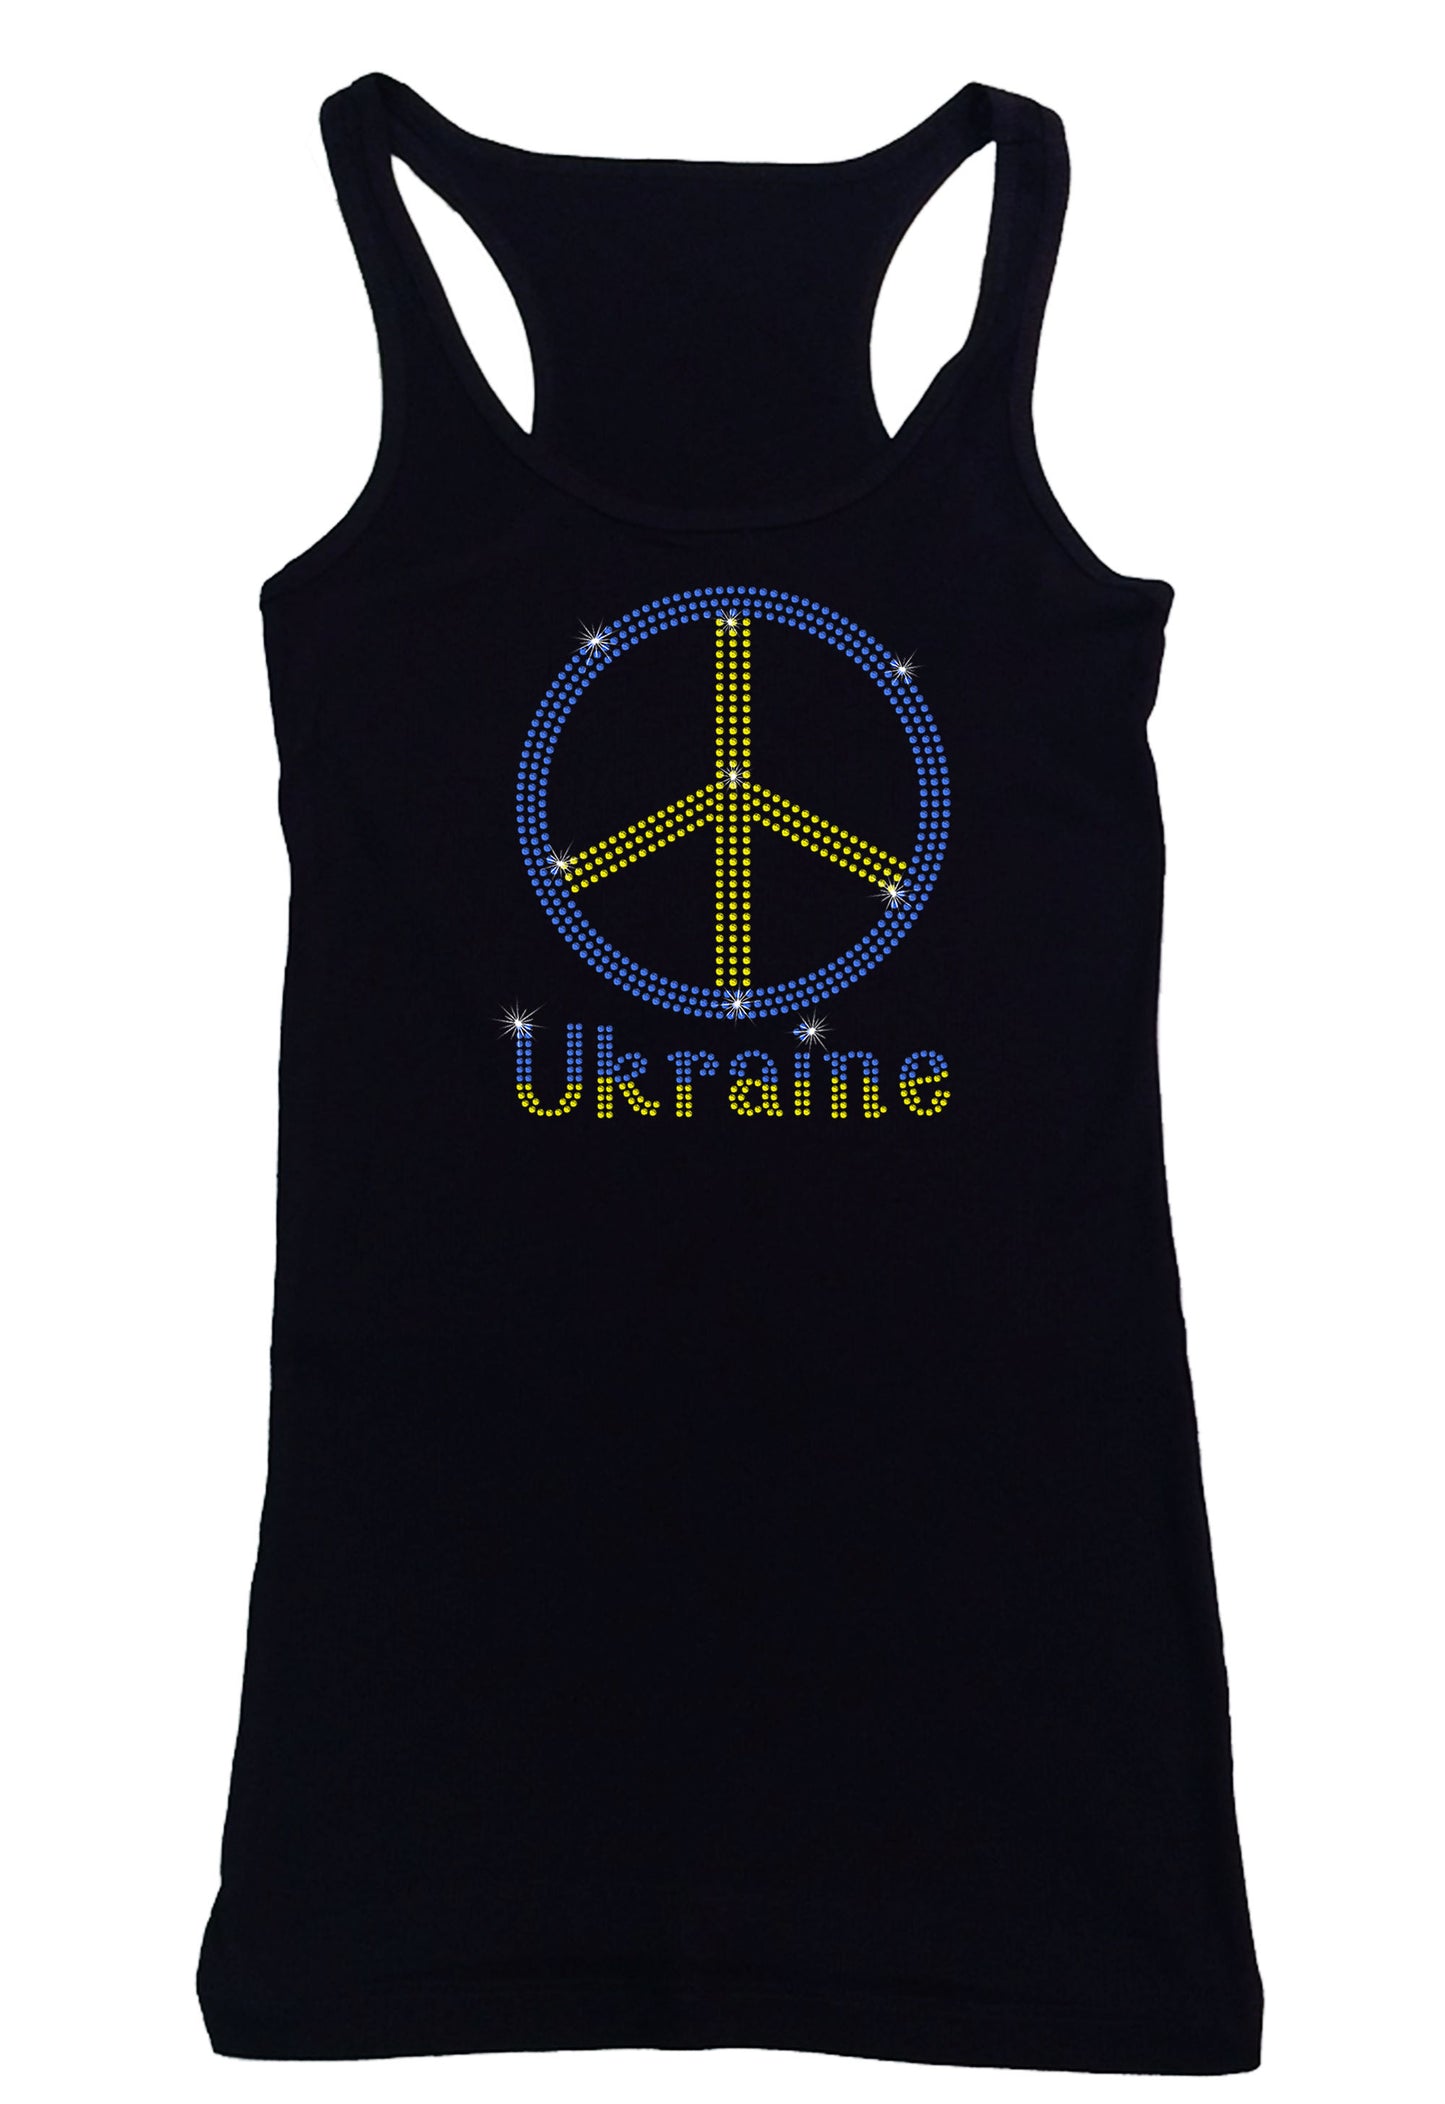 Women's Rhinestone Fitted Tight Snug Shirt Peace in Ukraine - Ukrainian Colors Peace Sign, Support for Ukraine